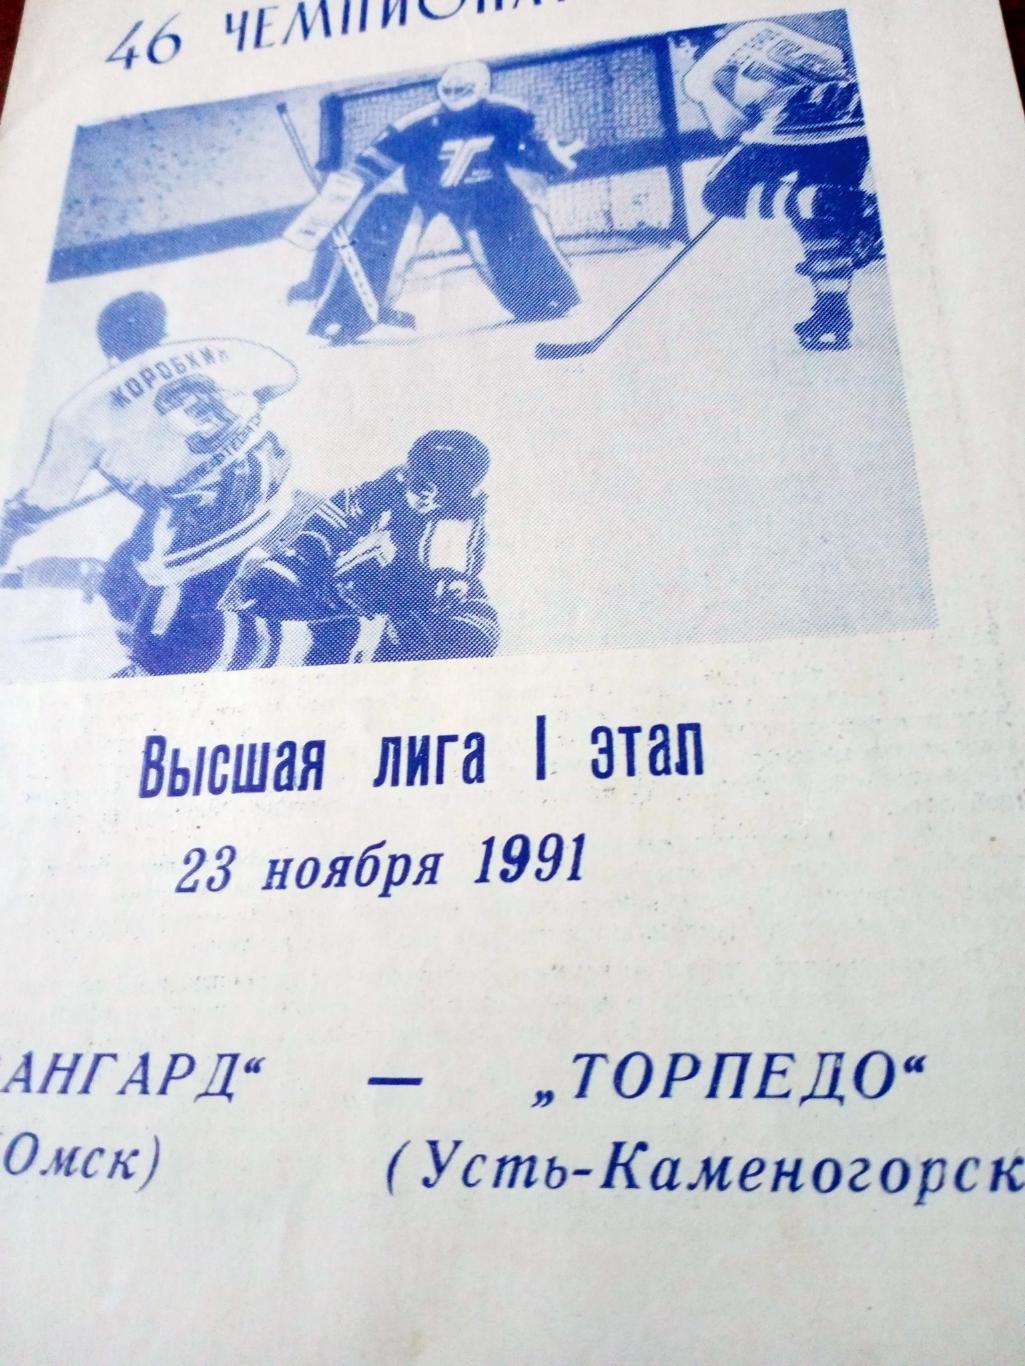 Авангард Омск - Торпедо Усть-Каменогорск. 23 ноября 1991 год